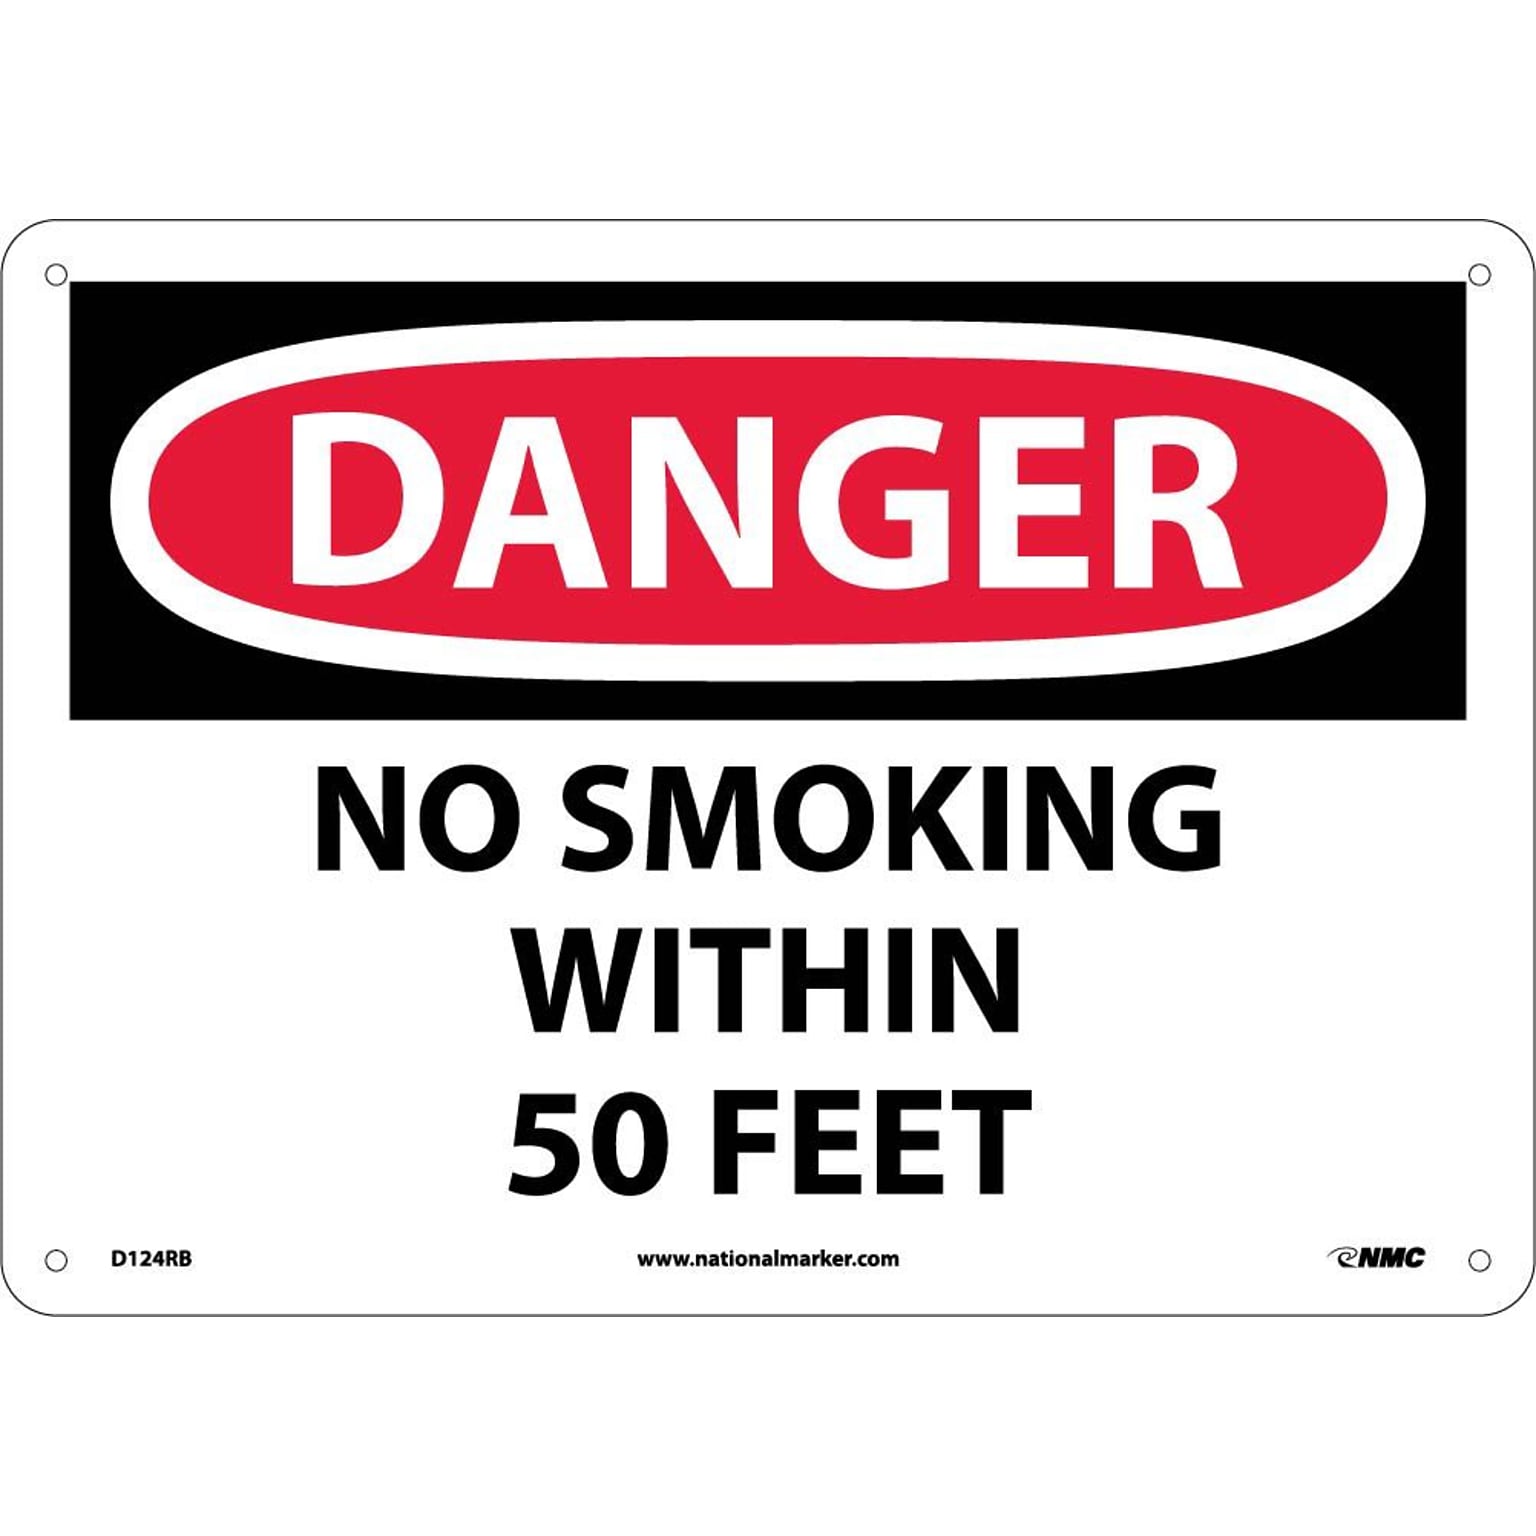 No Smoking Within 50 Feet, 10X14, Rigid Plastic, Danger Sign